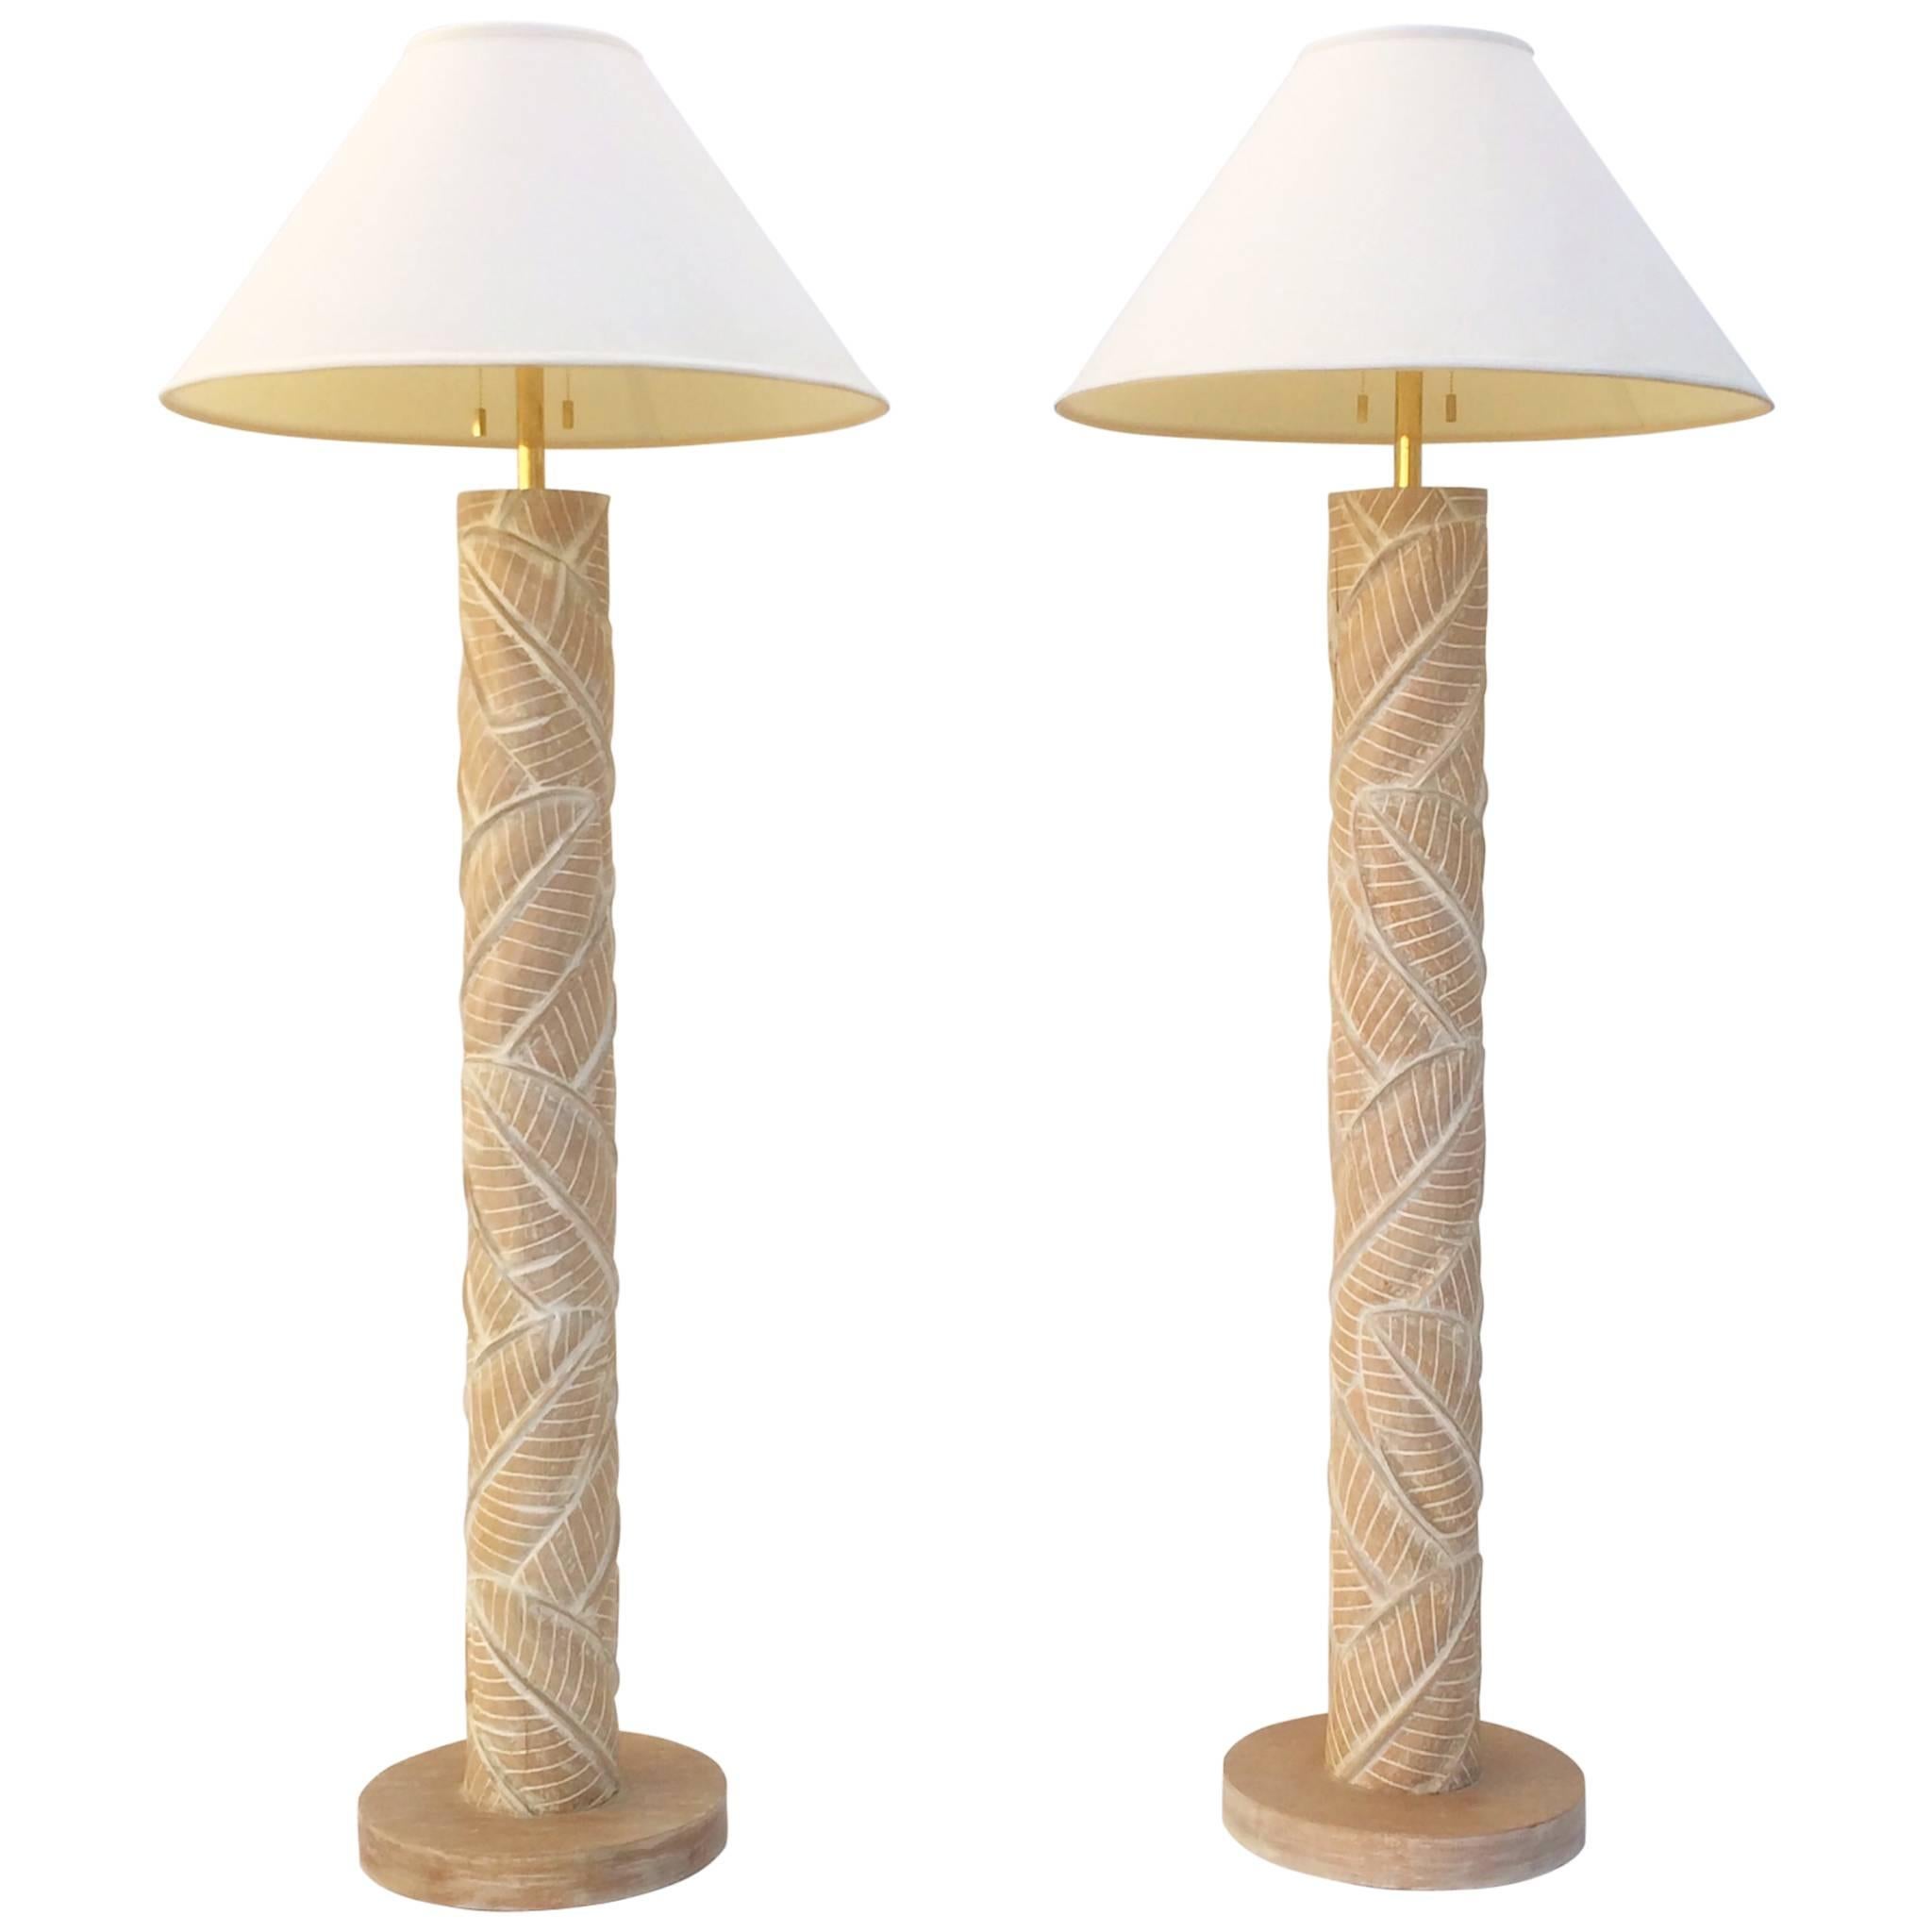 Pair of Carved Wood Floor Lamps